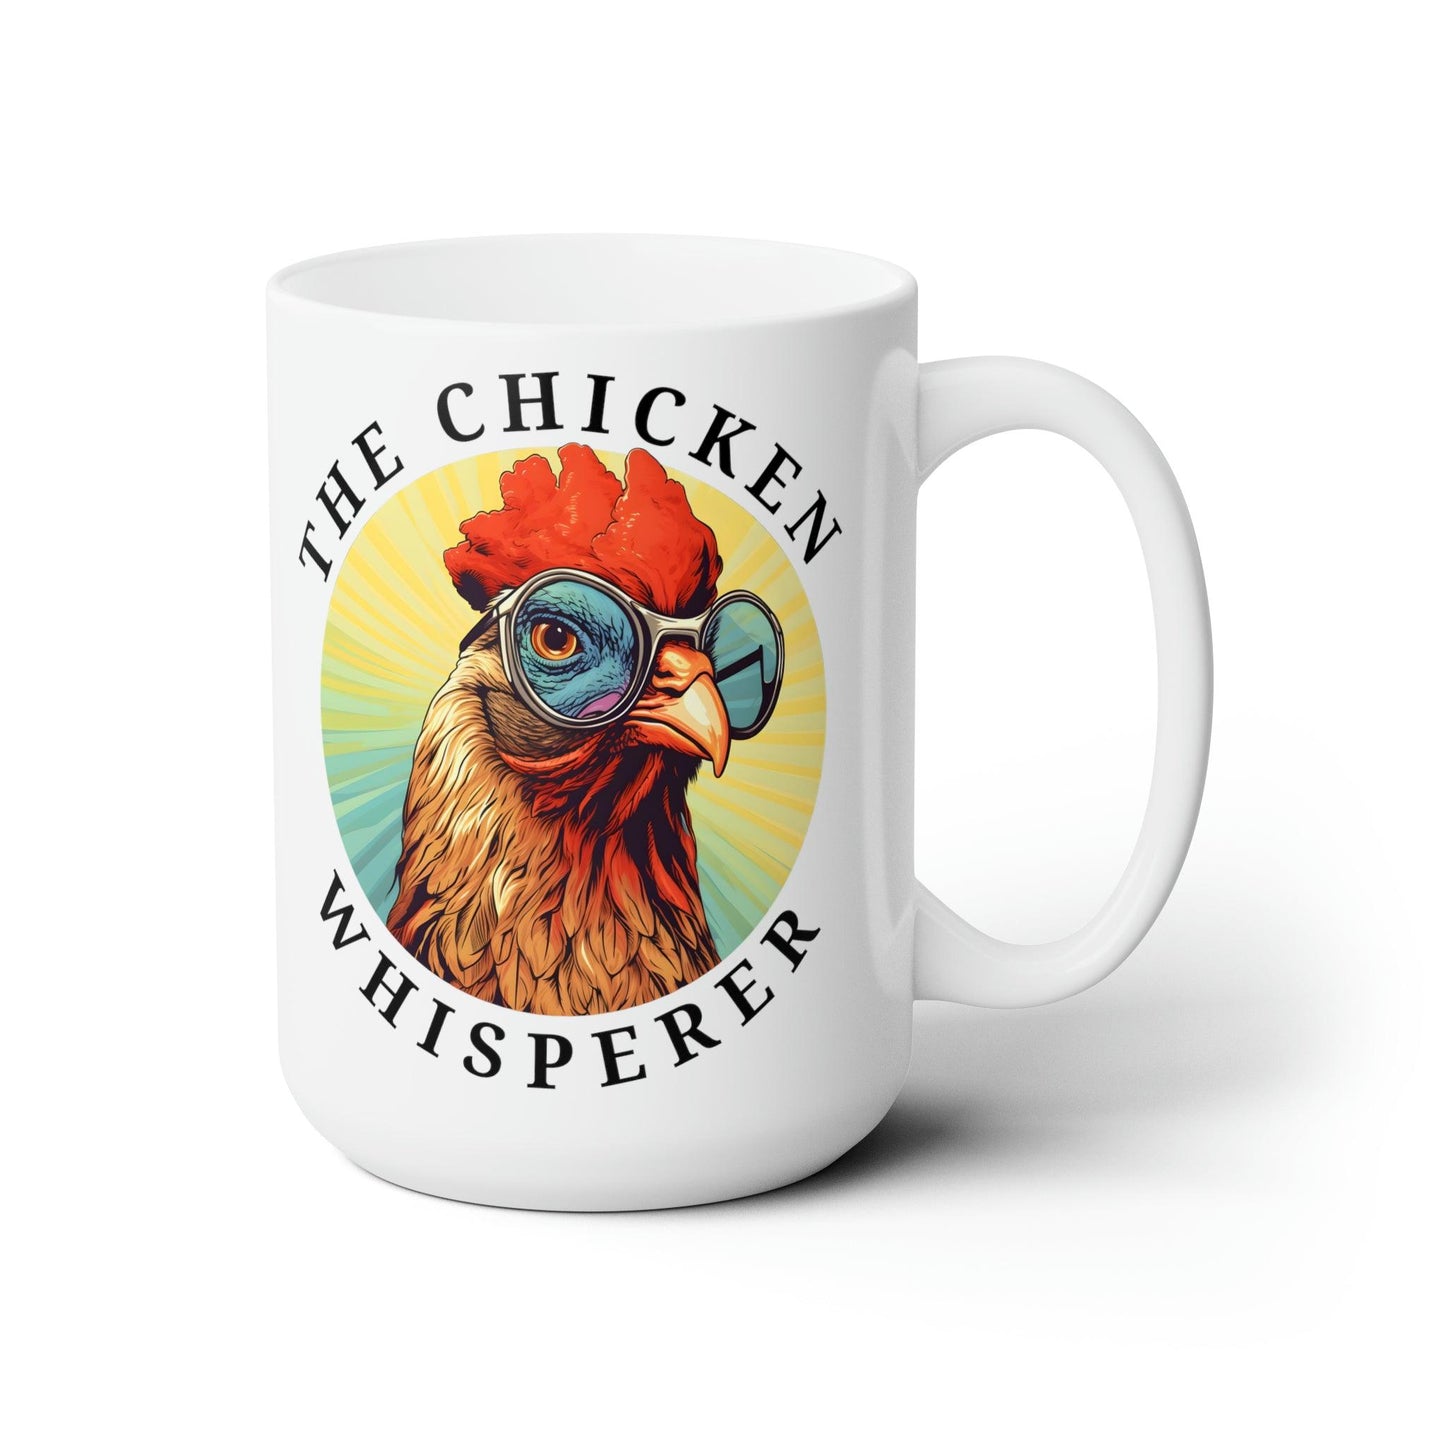 Funny Chicken Cup, Roster Mug Retro Vintage Mug The Chicken Whisperer Mug Chicken Coffee Mug